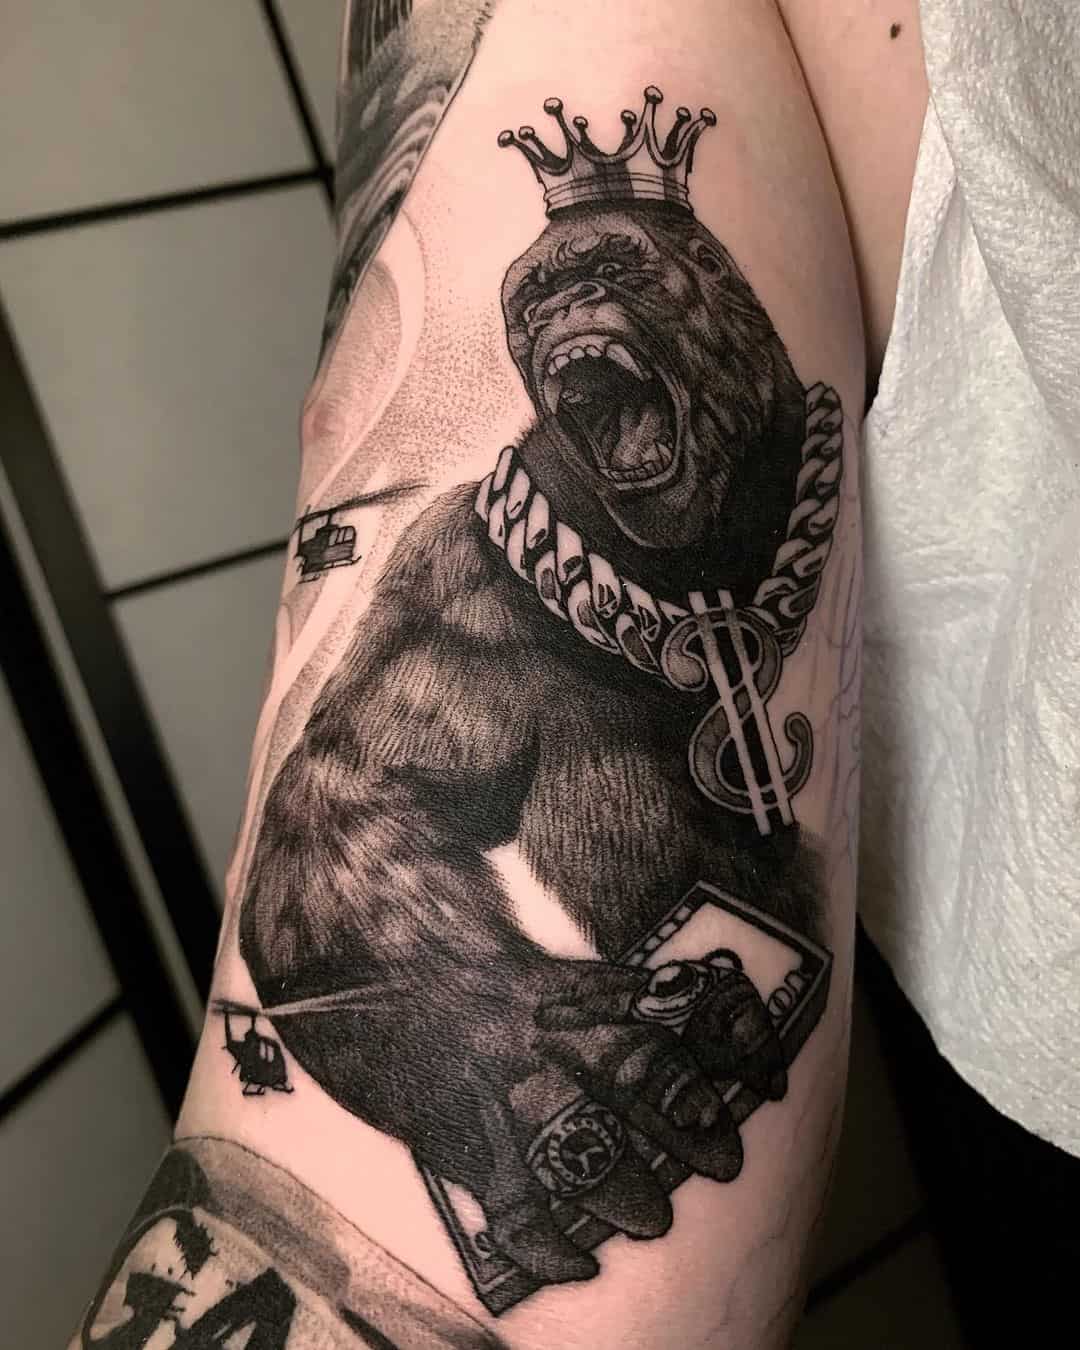 Idea del brazo de los diseños del tatuaje de King Kong